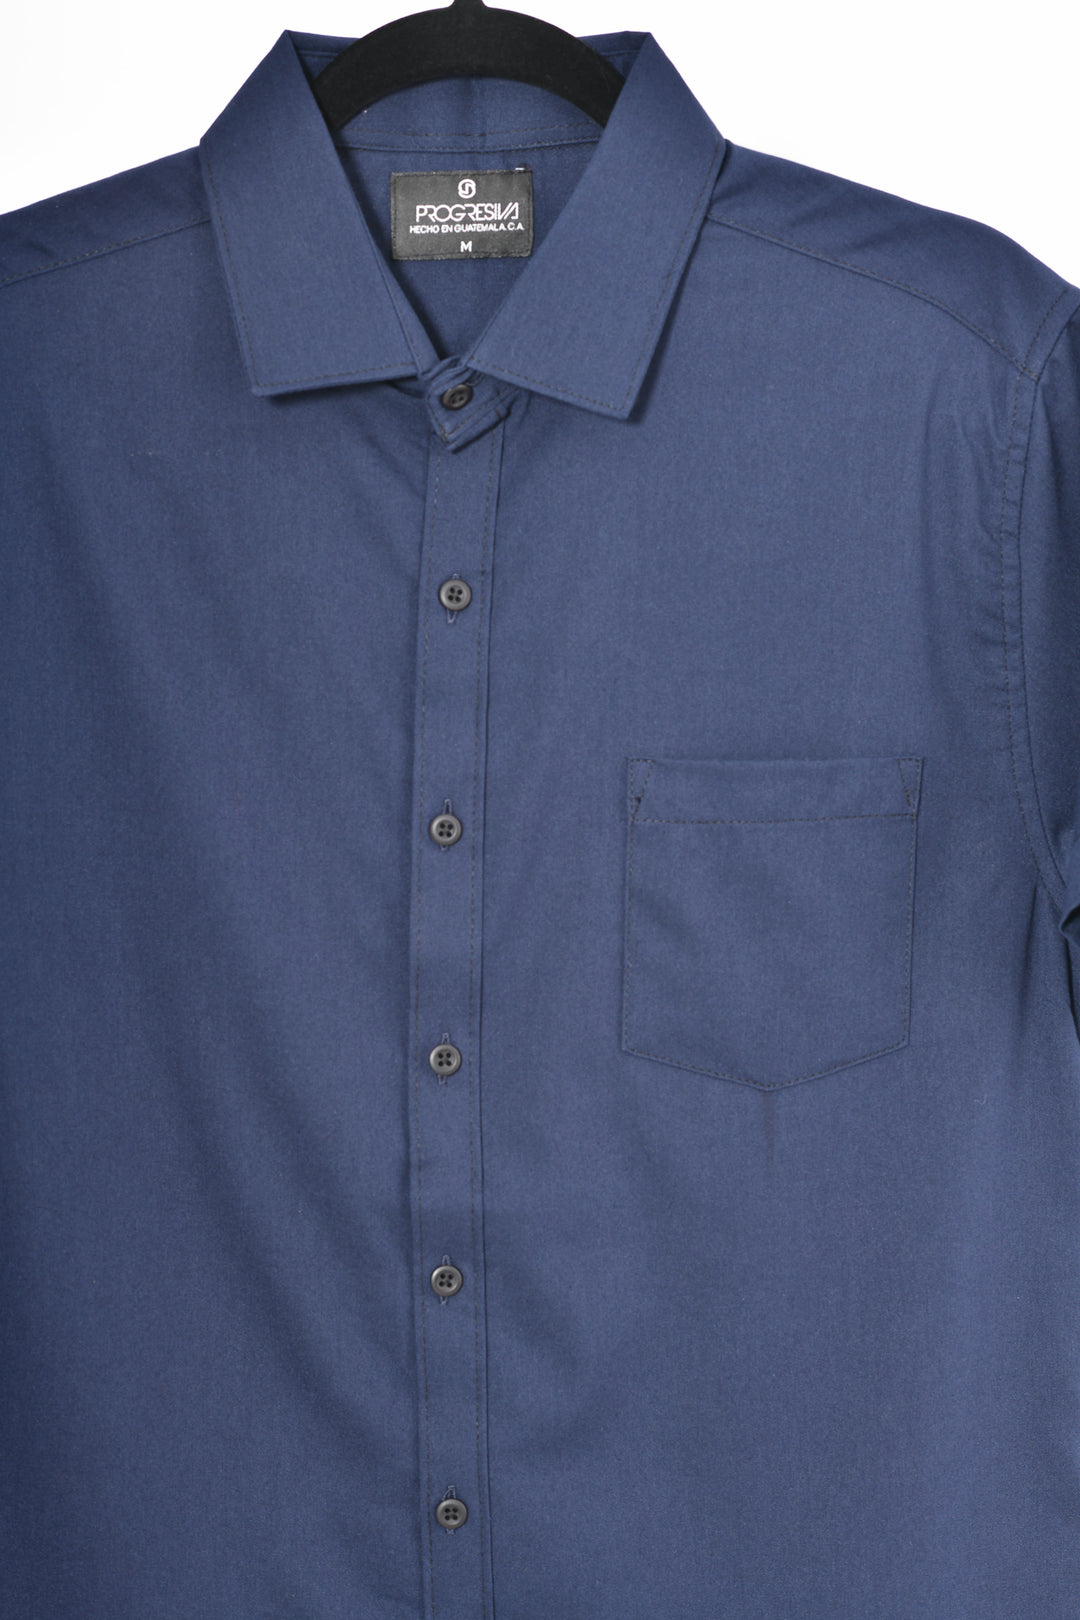 Camisa oxford manga corta cuello normal - azul marino